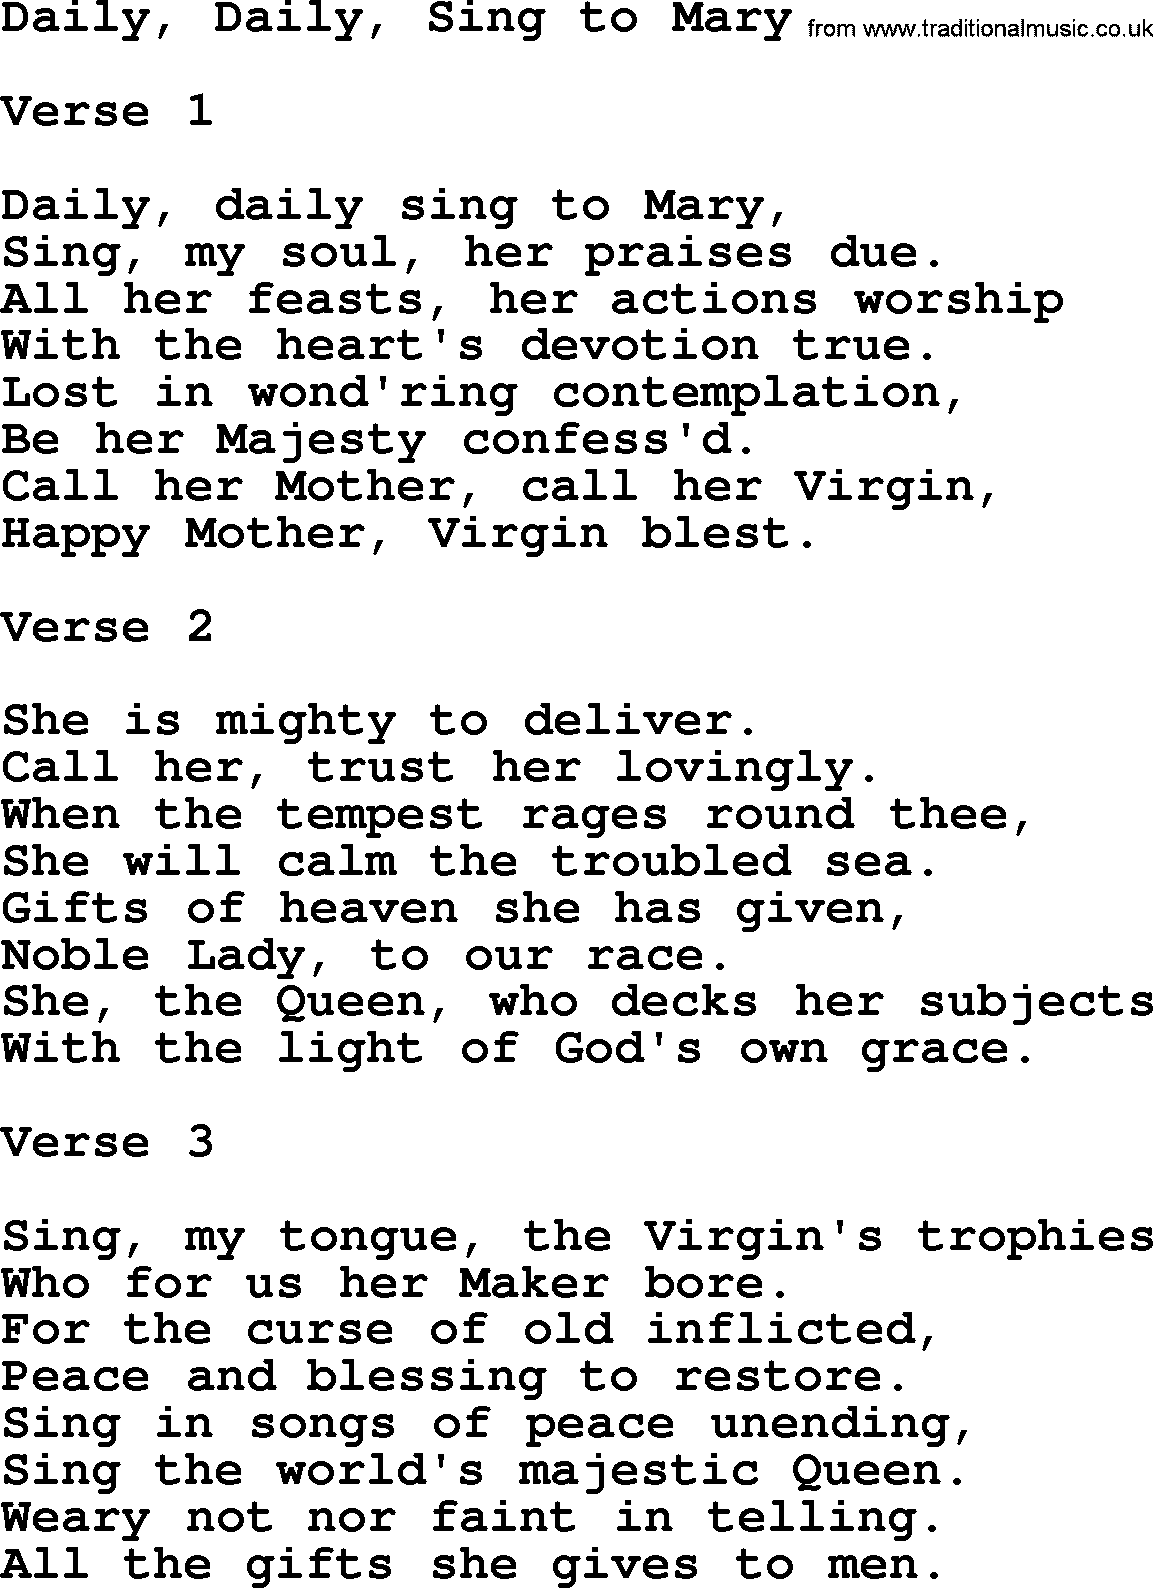 Catholic Hymn: Daily, Daily, Sing To Mary3 lyrics with PDF